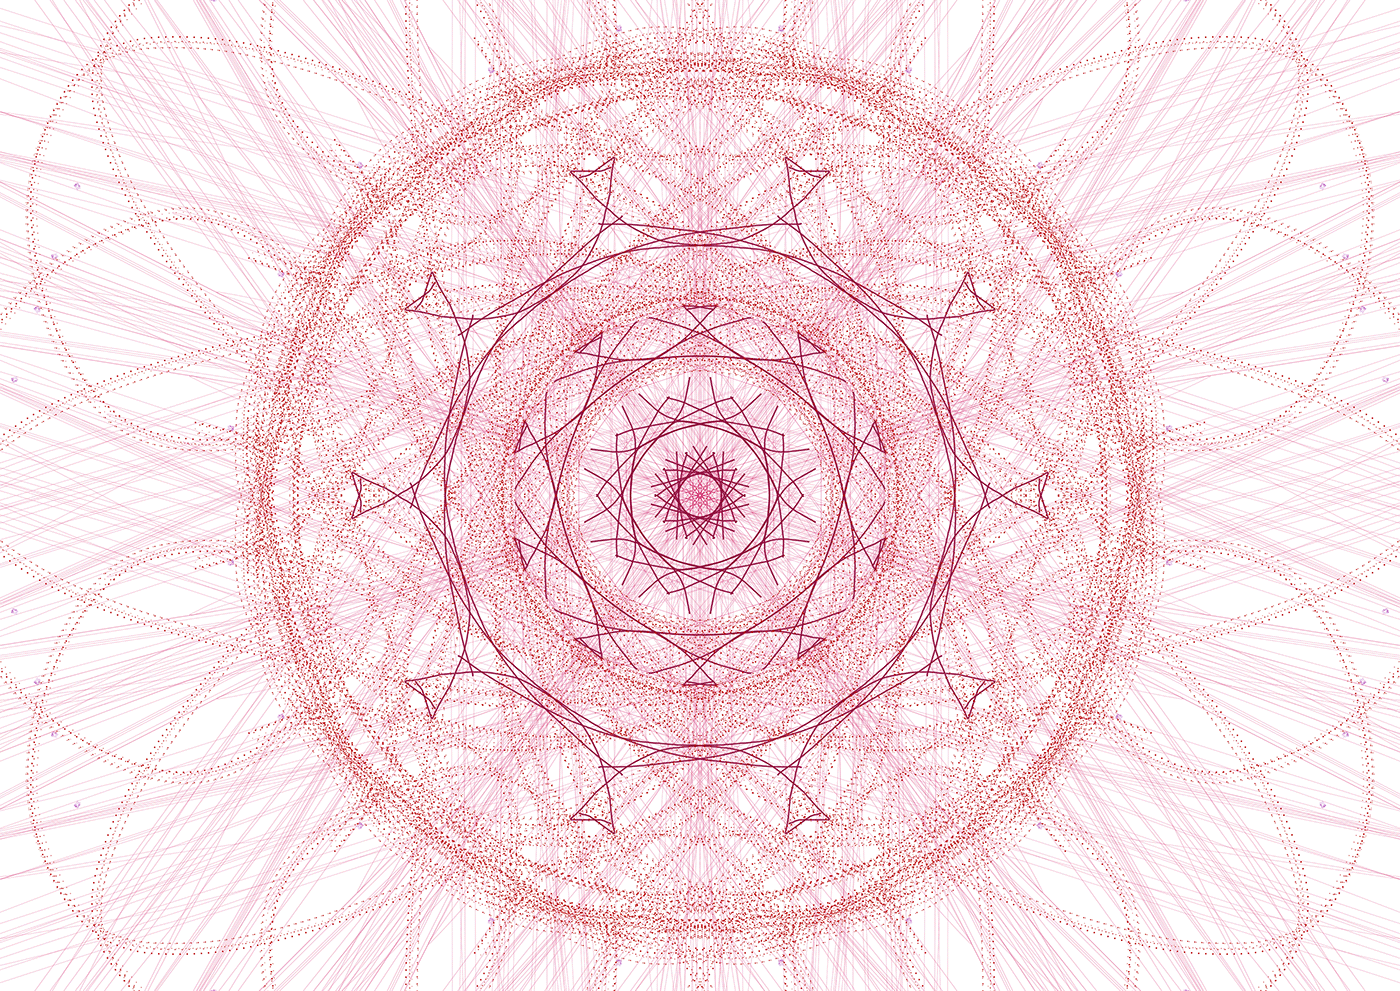 Mandala rigveda geometry time-microcosm cosmic diagram sanskrit radial balance wholeness universe diagram